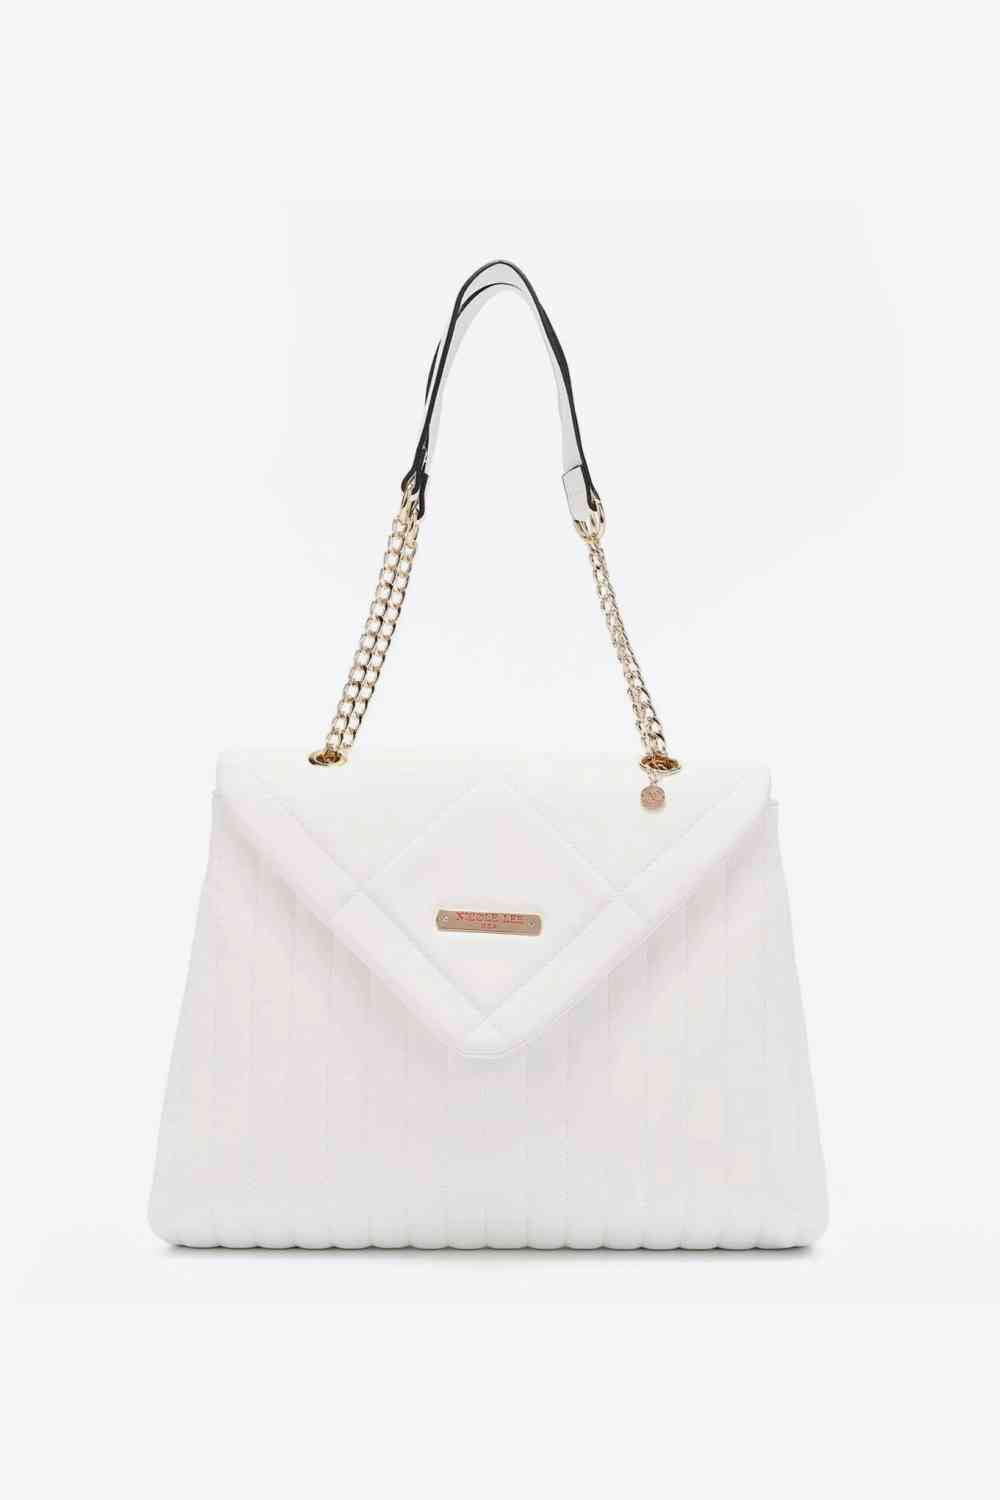 Nicole Lee USA A Nice Touch Handbag White One Size